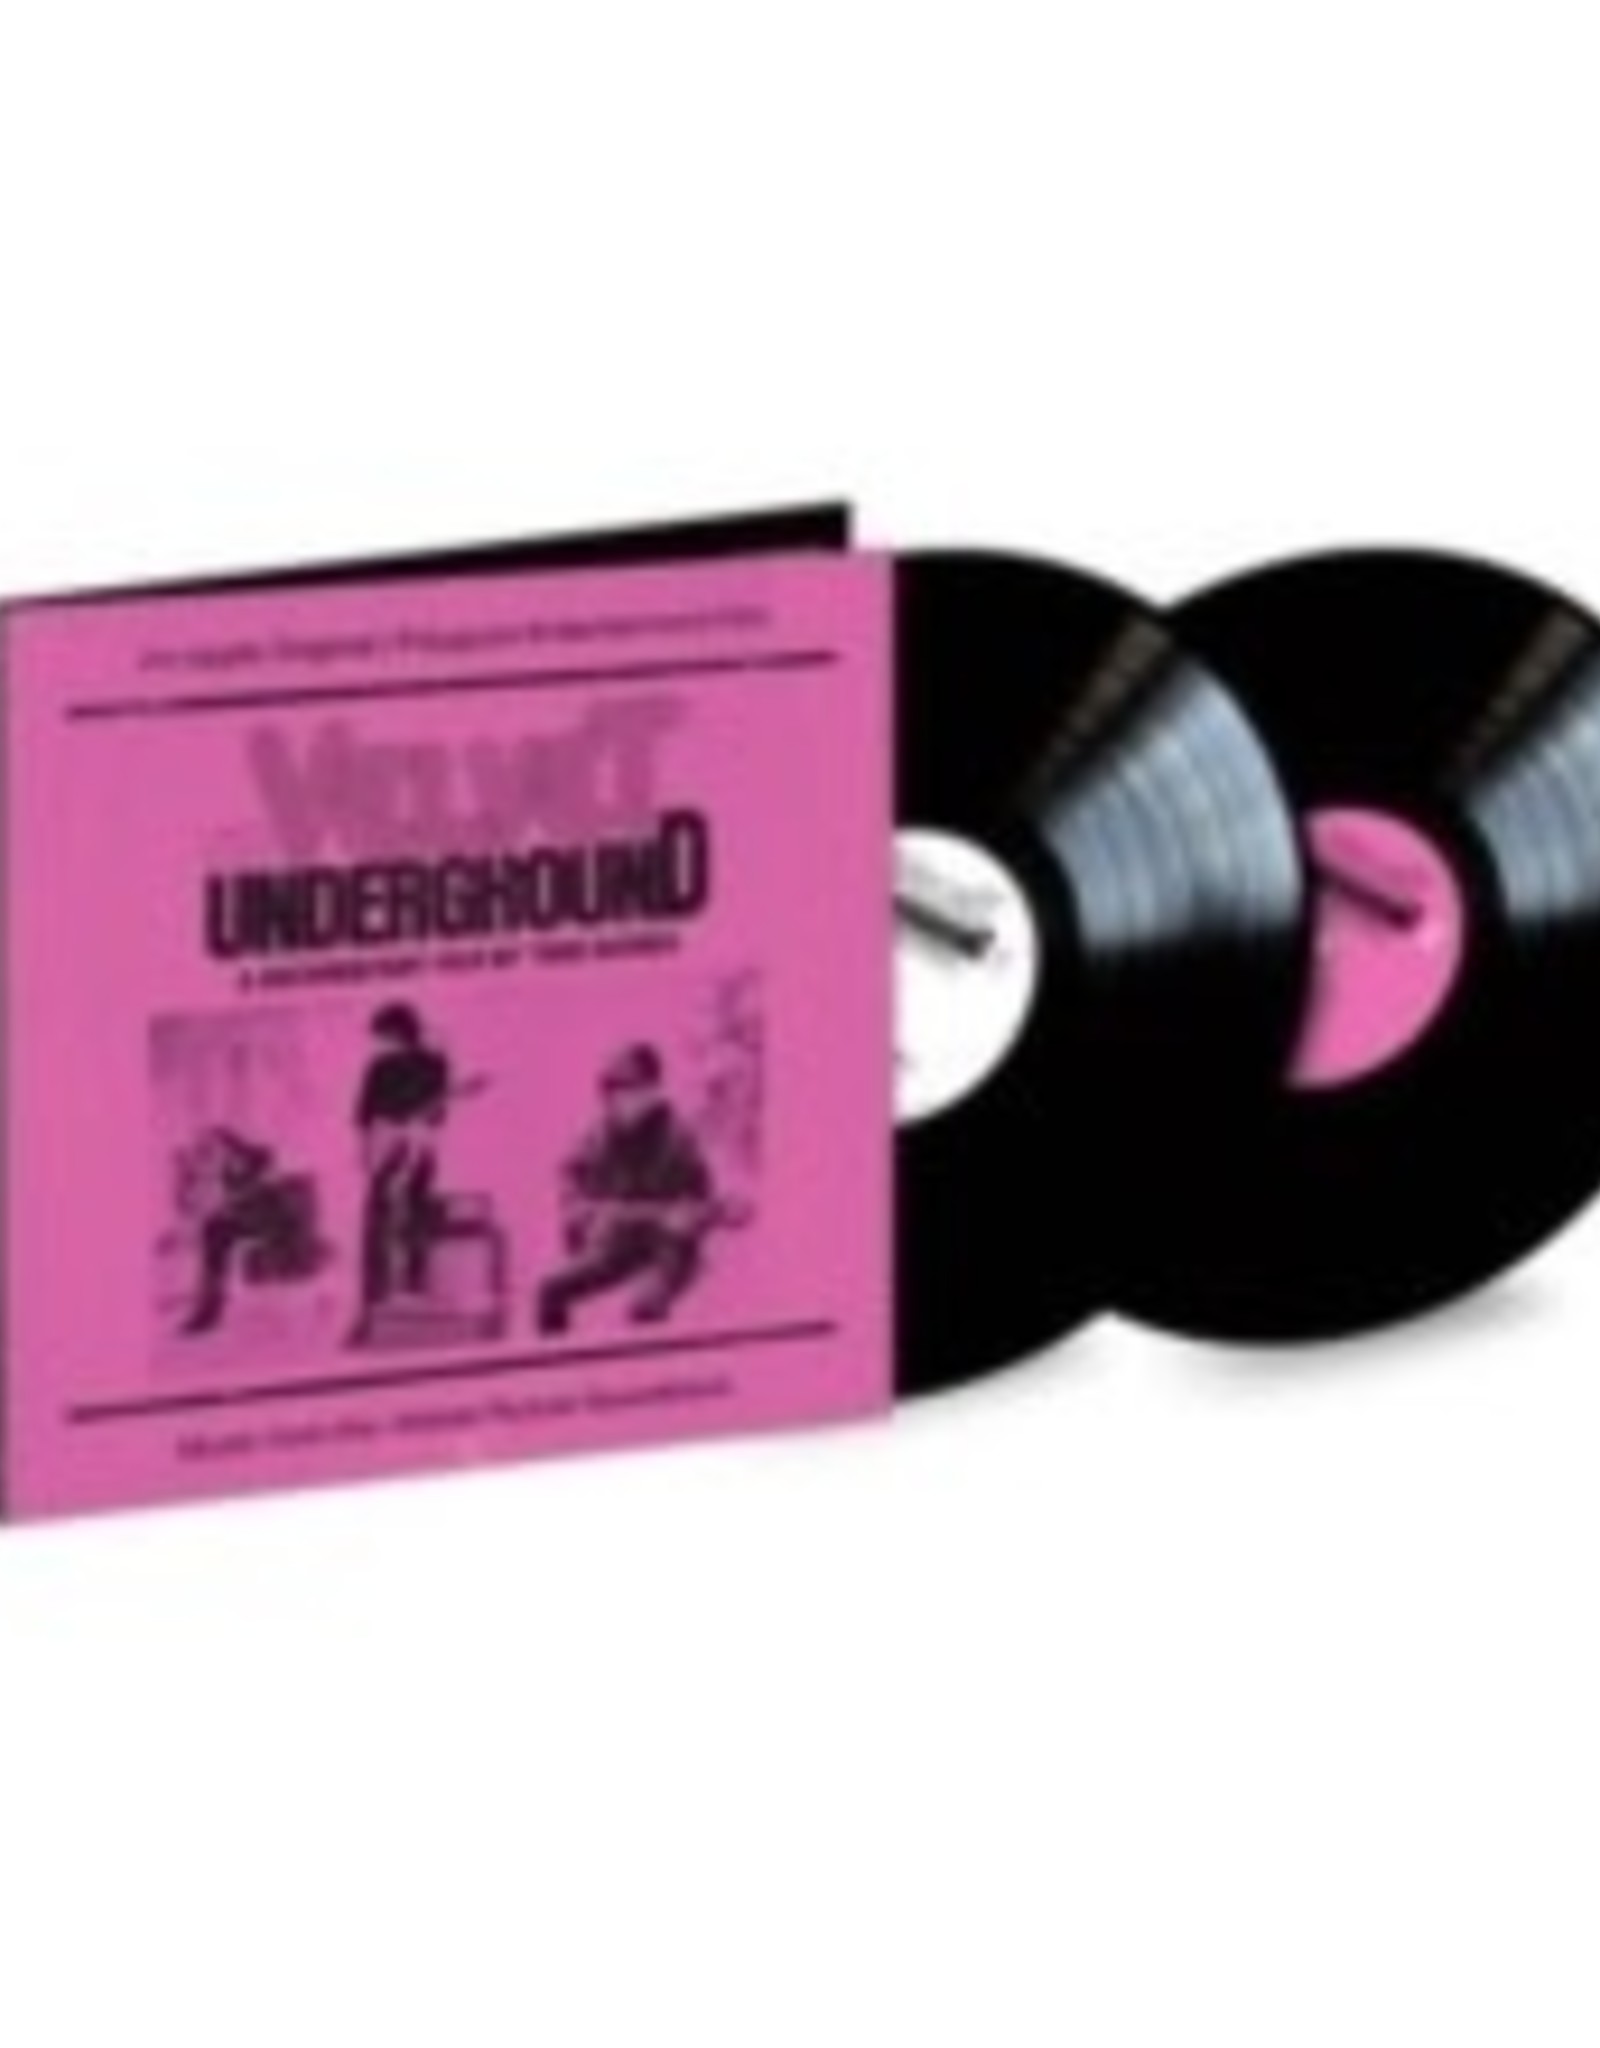 The Velvet Underground: A Documentary Film By Todd Haynes OST